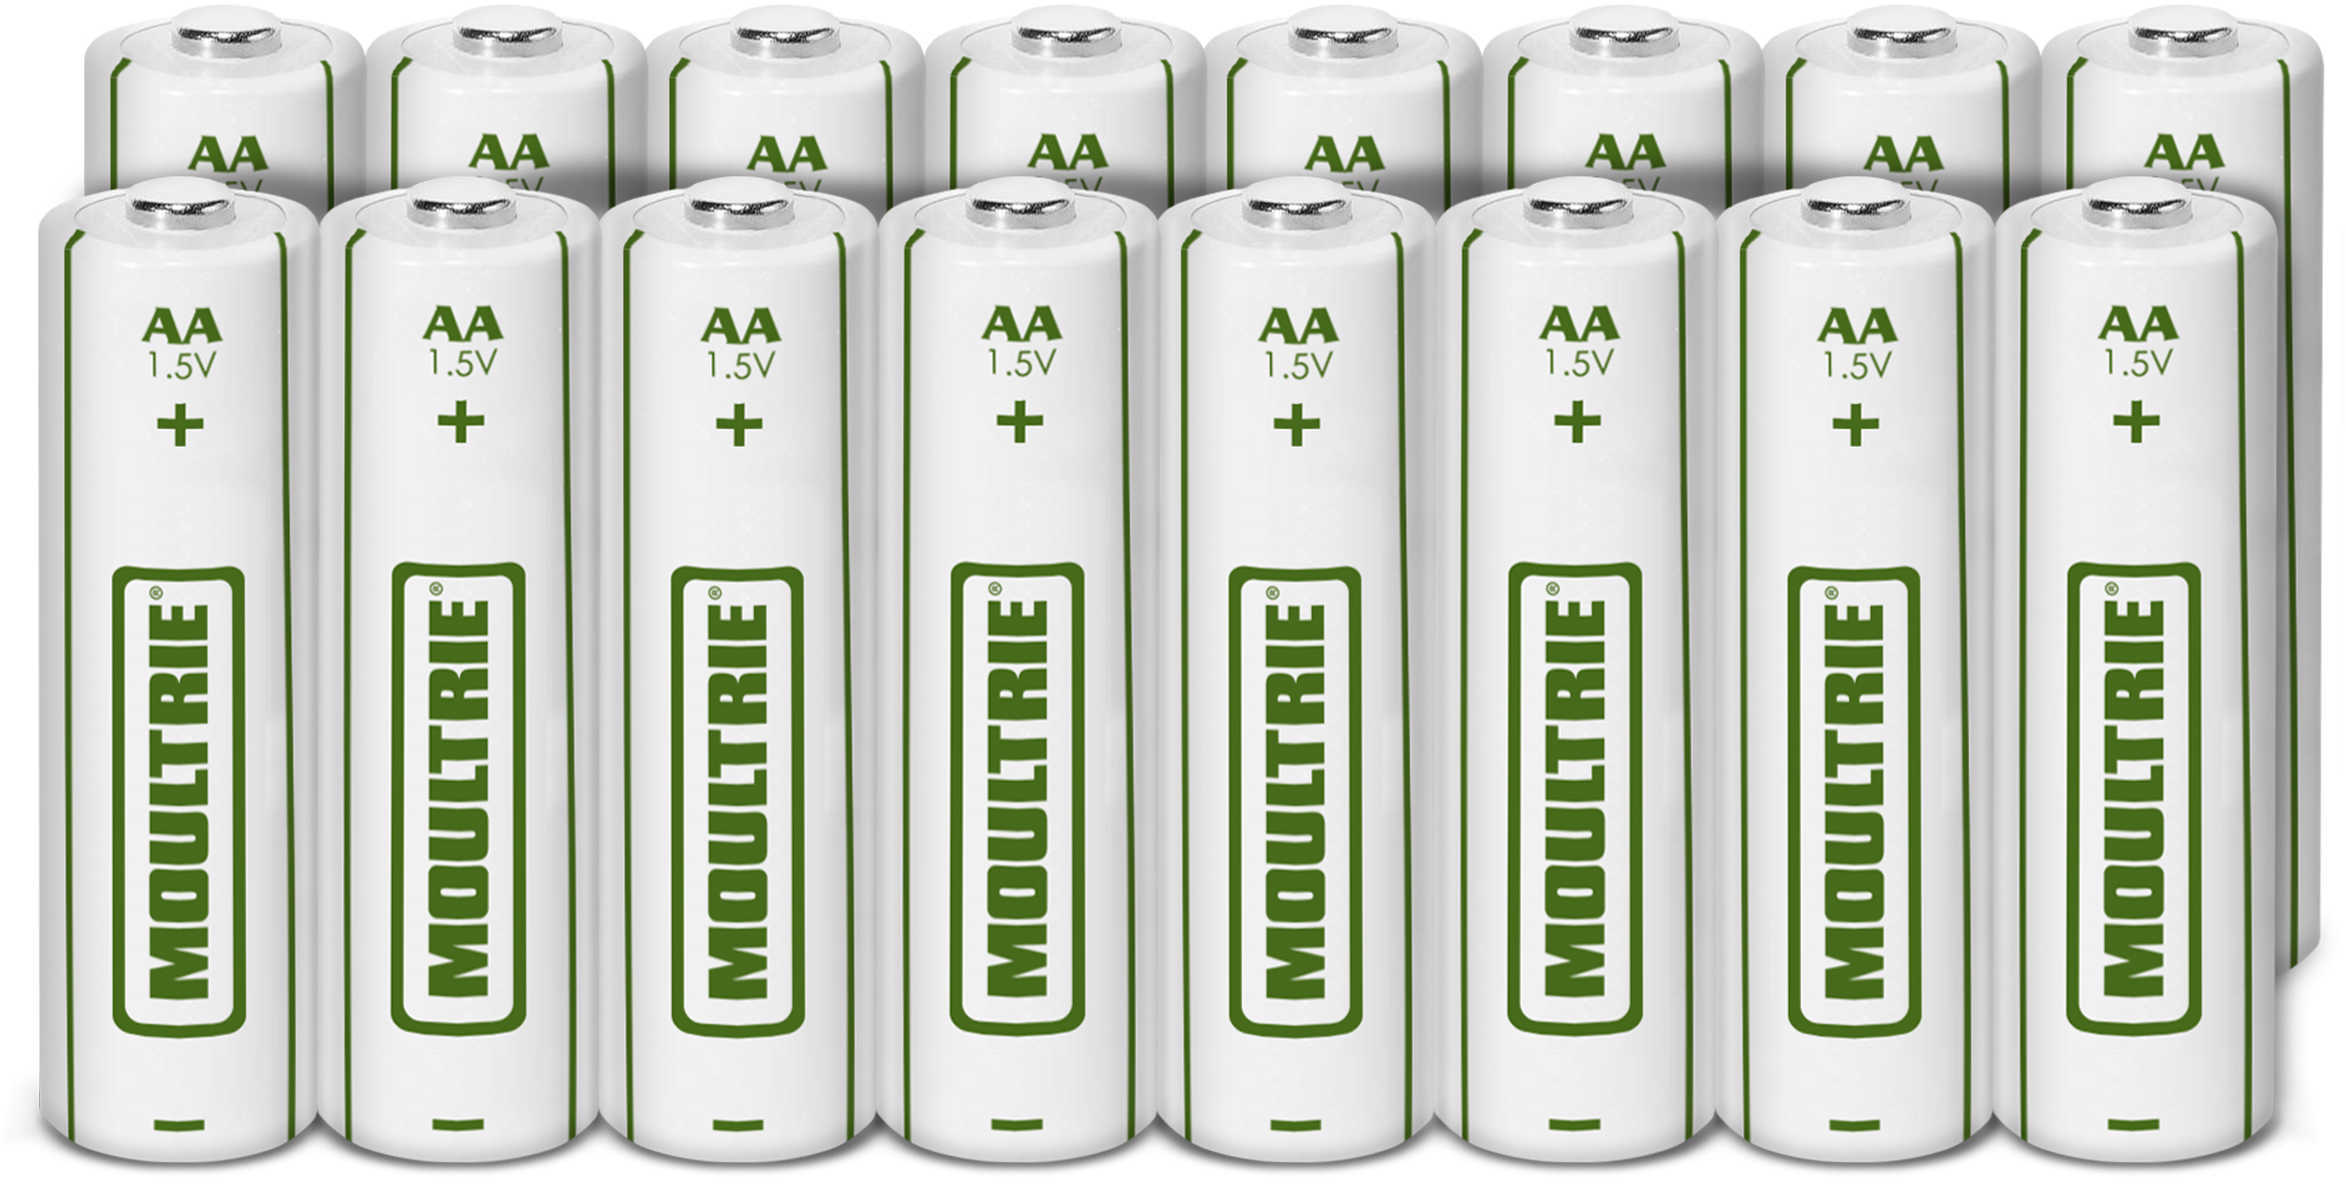 Moultrie Feeders AA Batteries, Package of 16